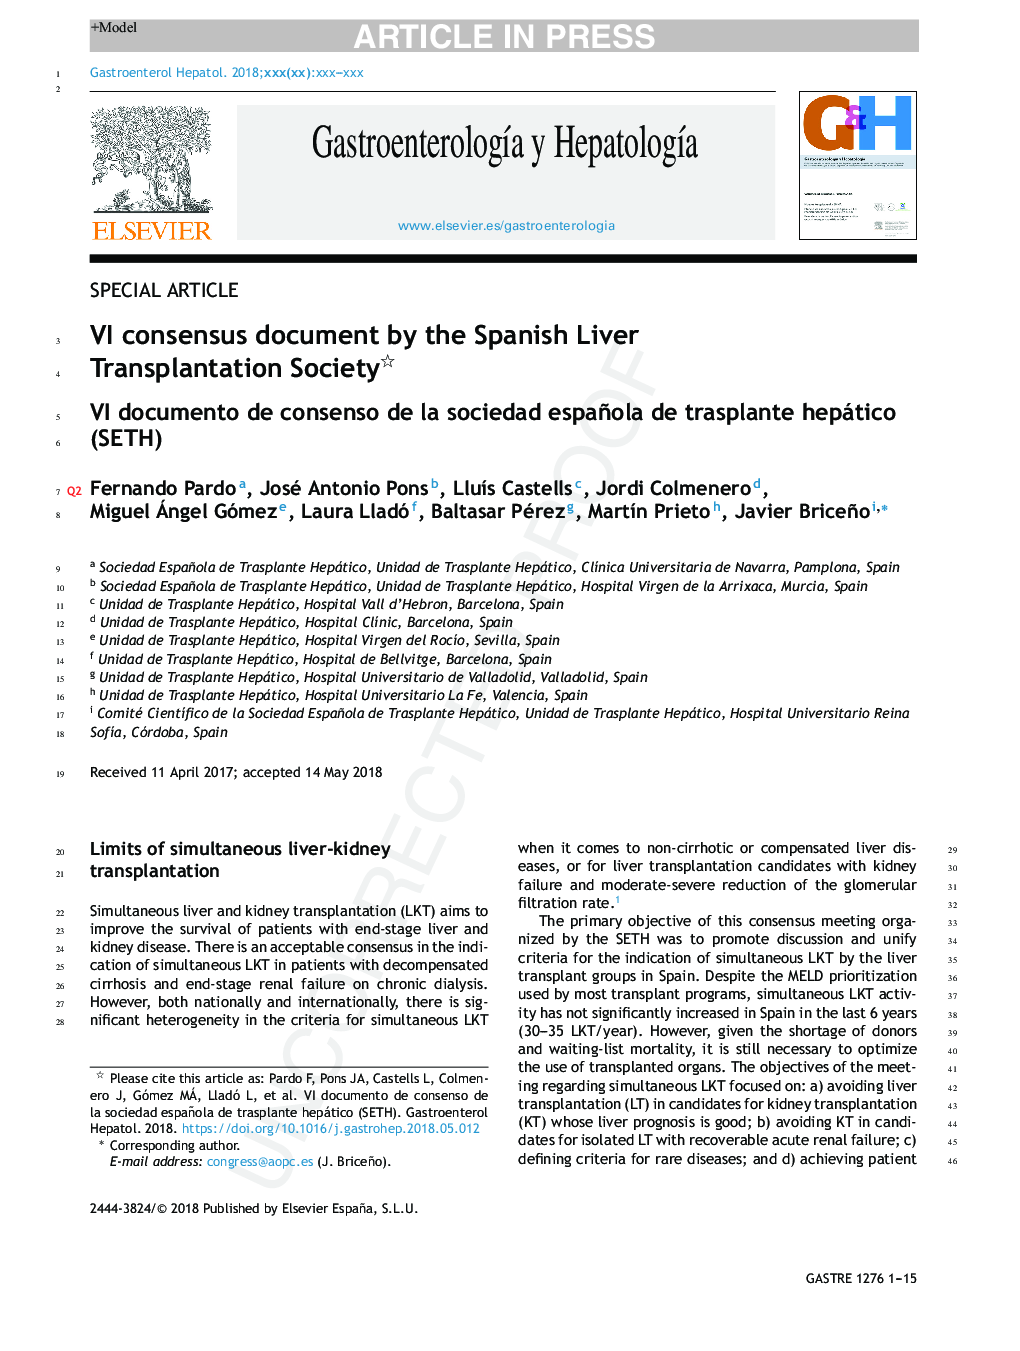 VI consensus document by the Spanish Liver Transplantation Society